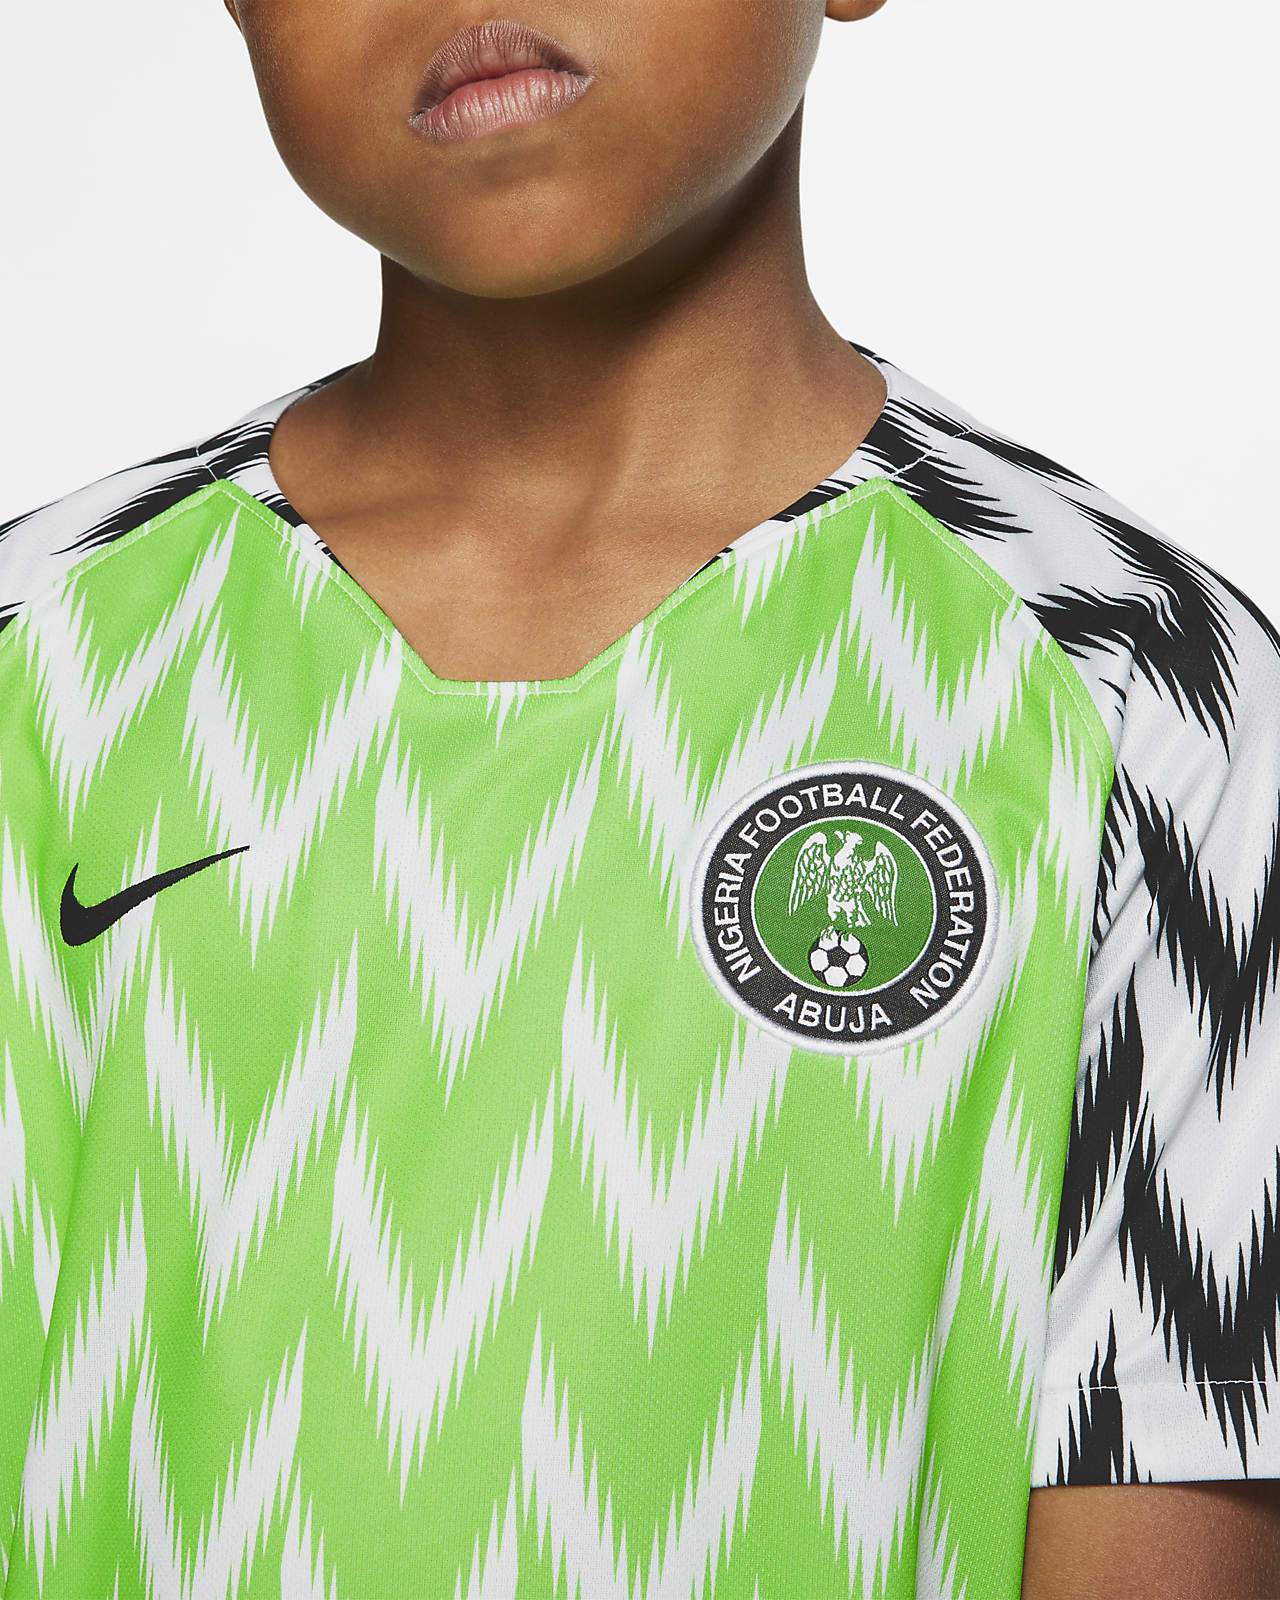 nigeria 2019 jersey